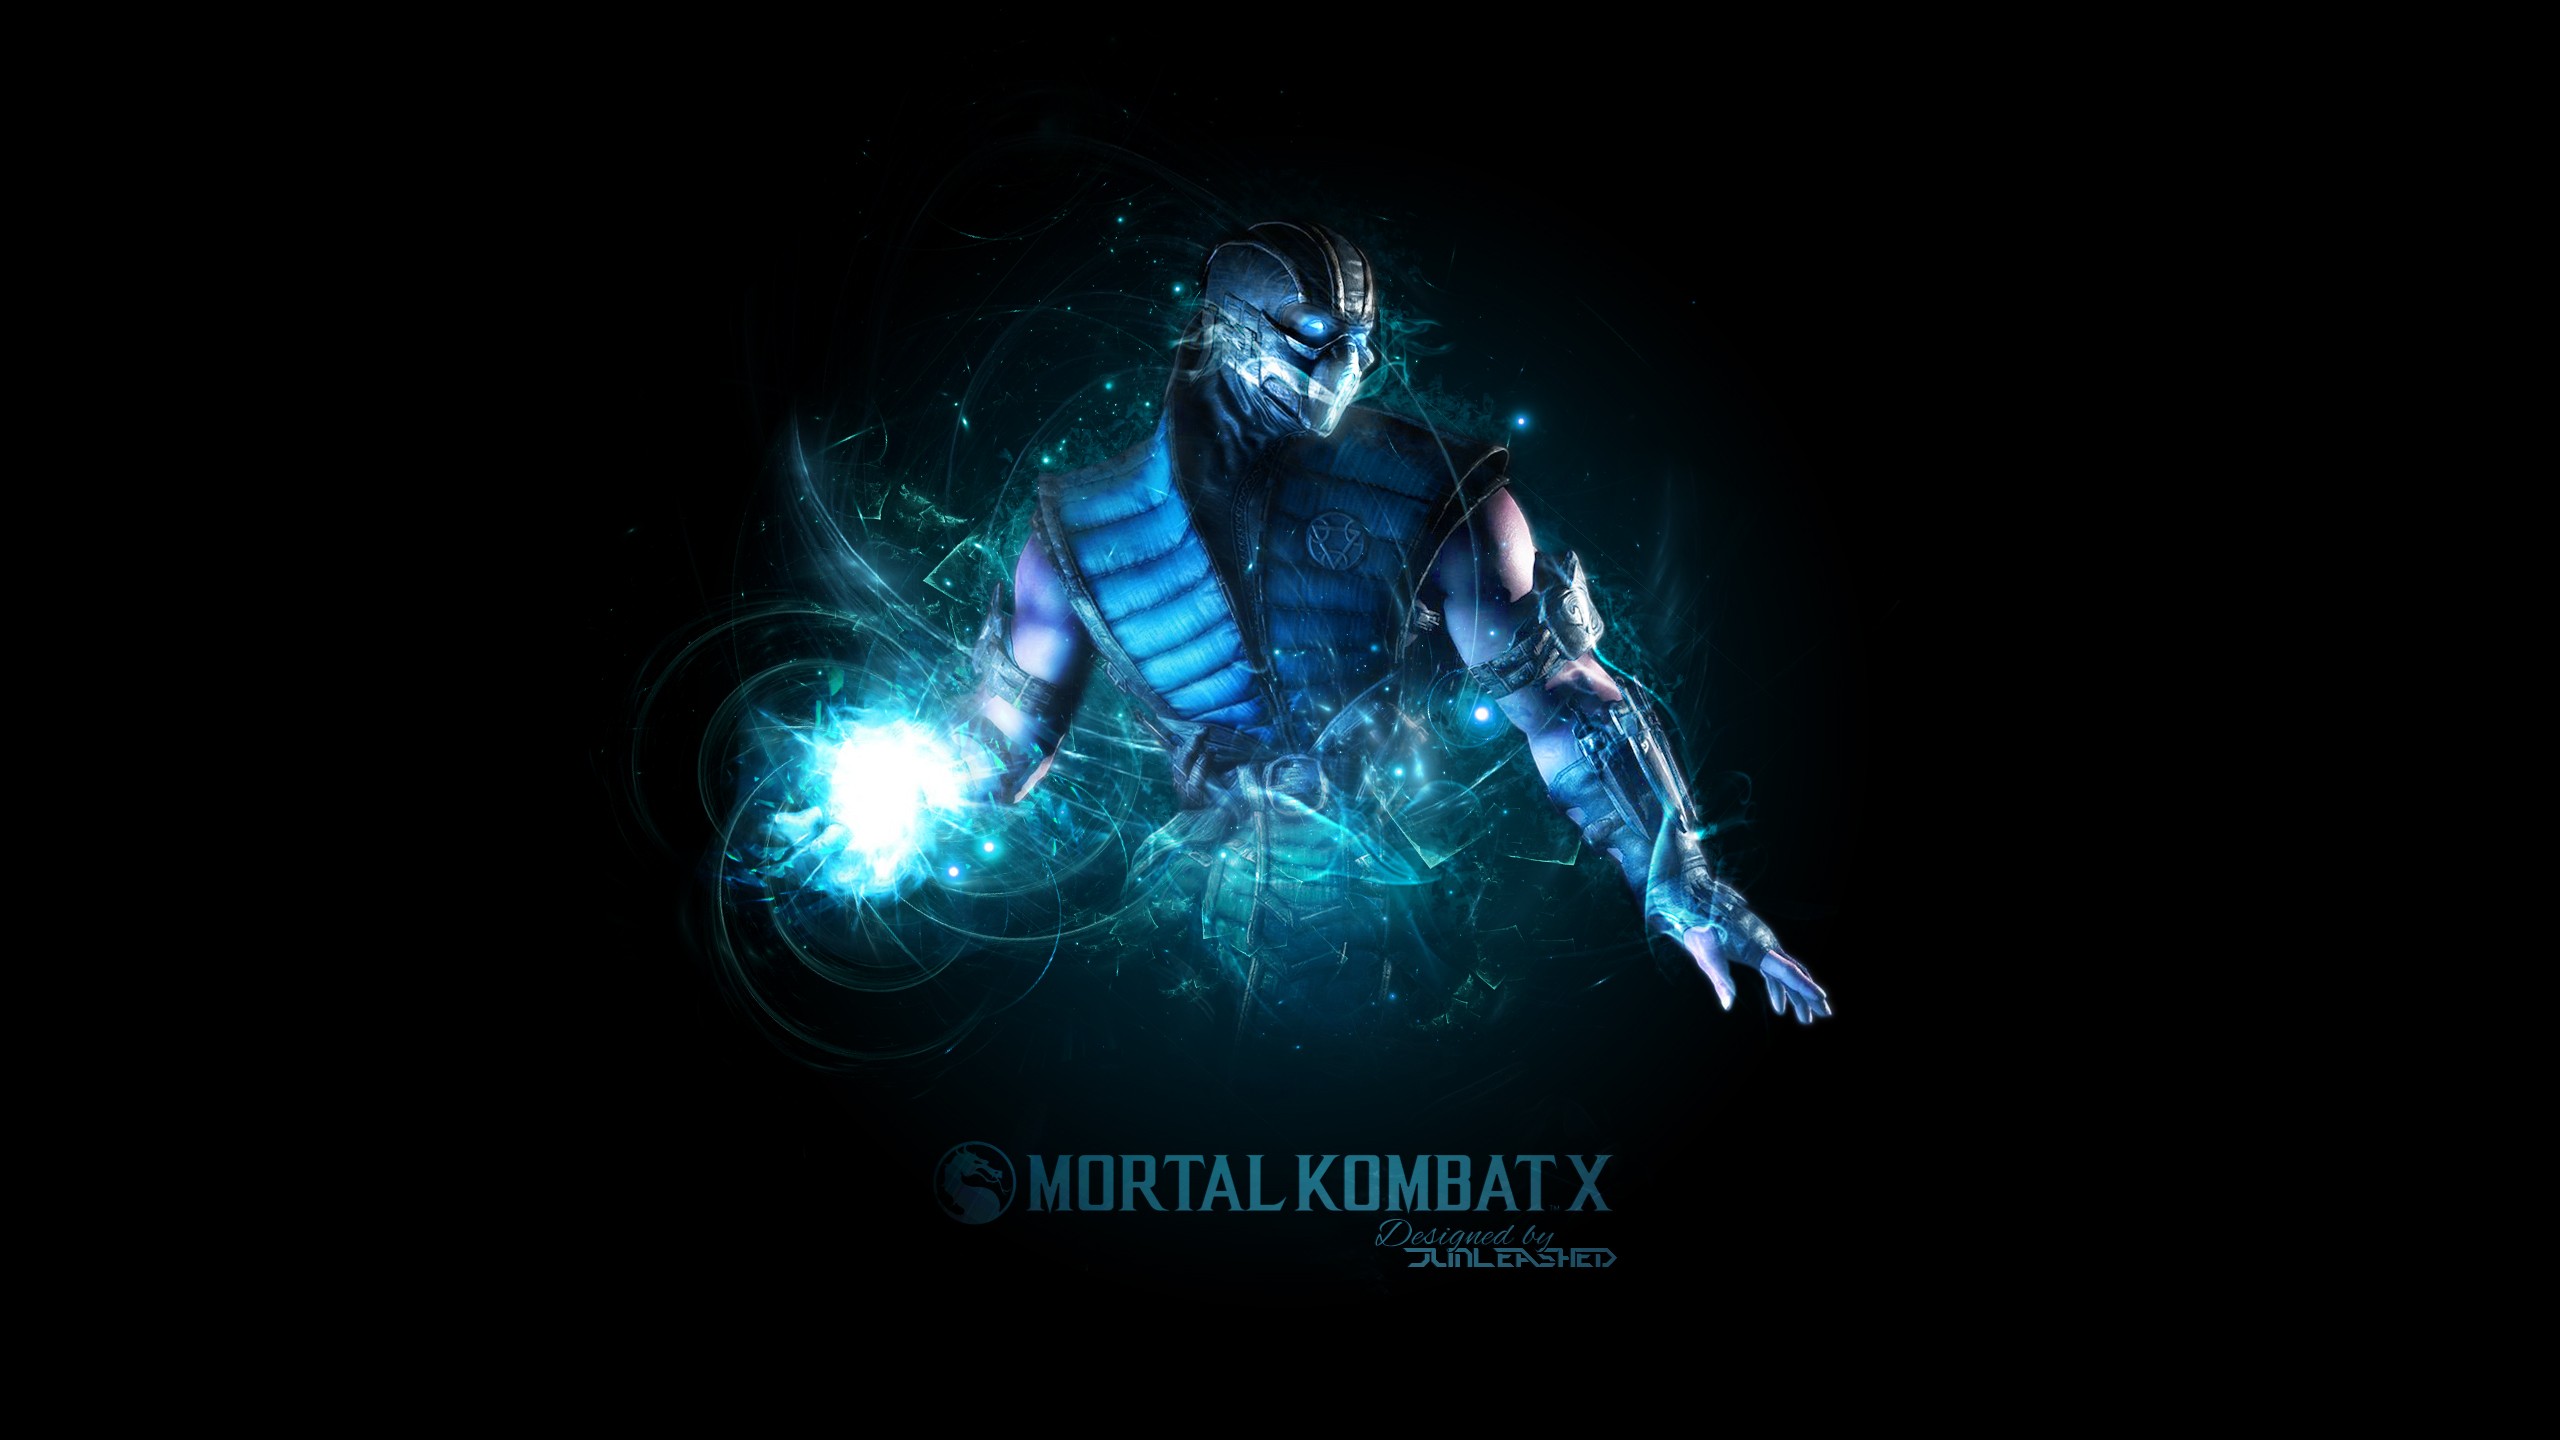 mortal kombat x logo Wallpapers